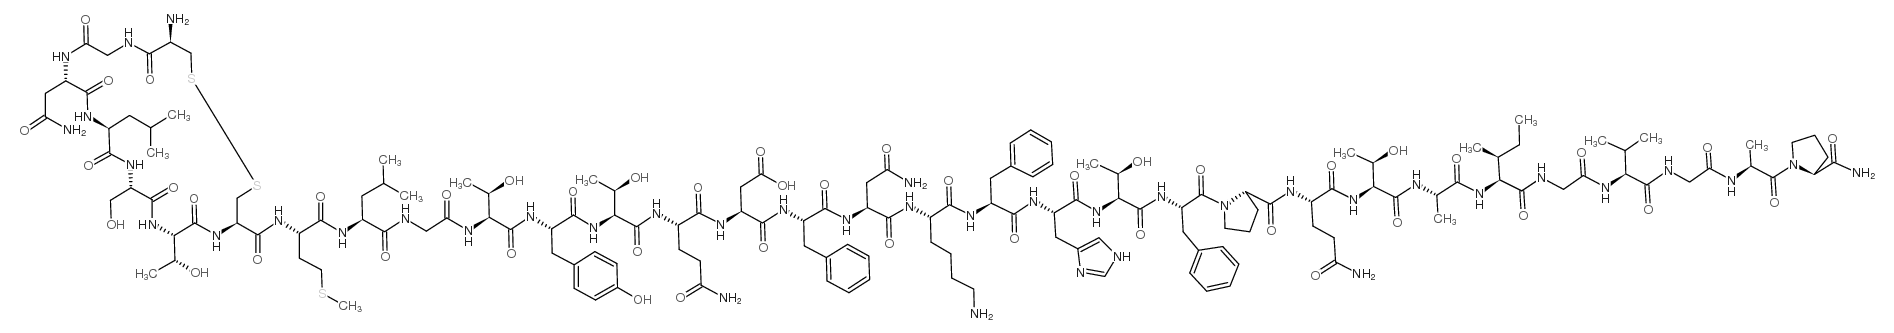 Calcitonin (human) trifluoroacetate salt picture